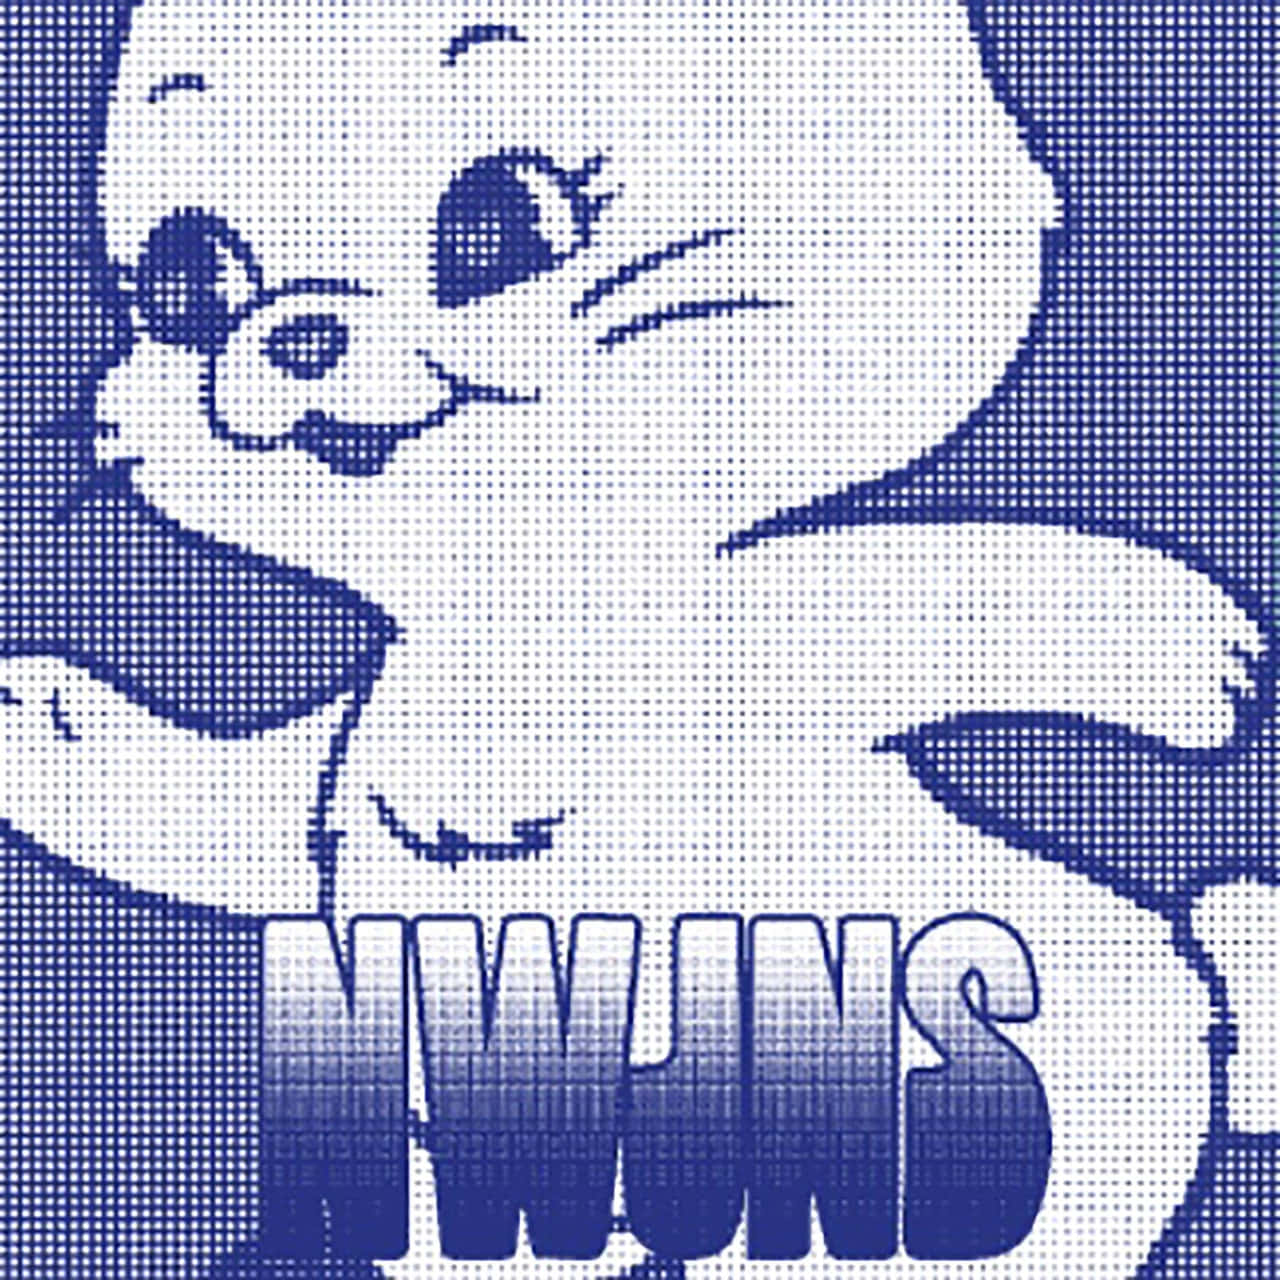 New Jeans Mascot Digital Artwork Wallpaper